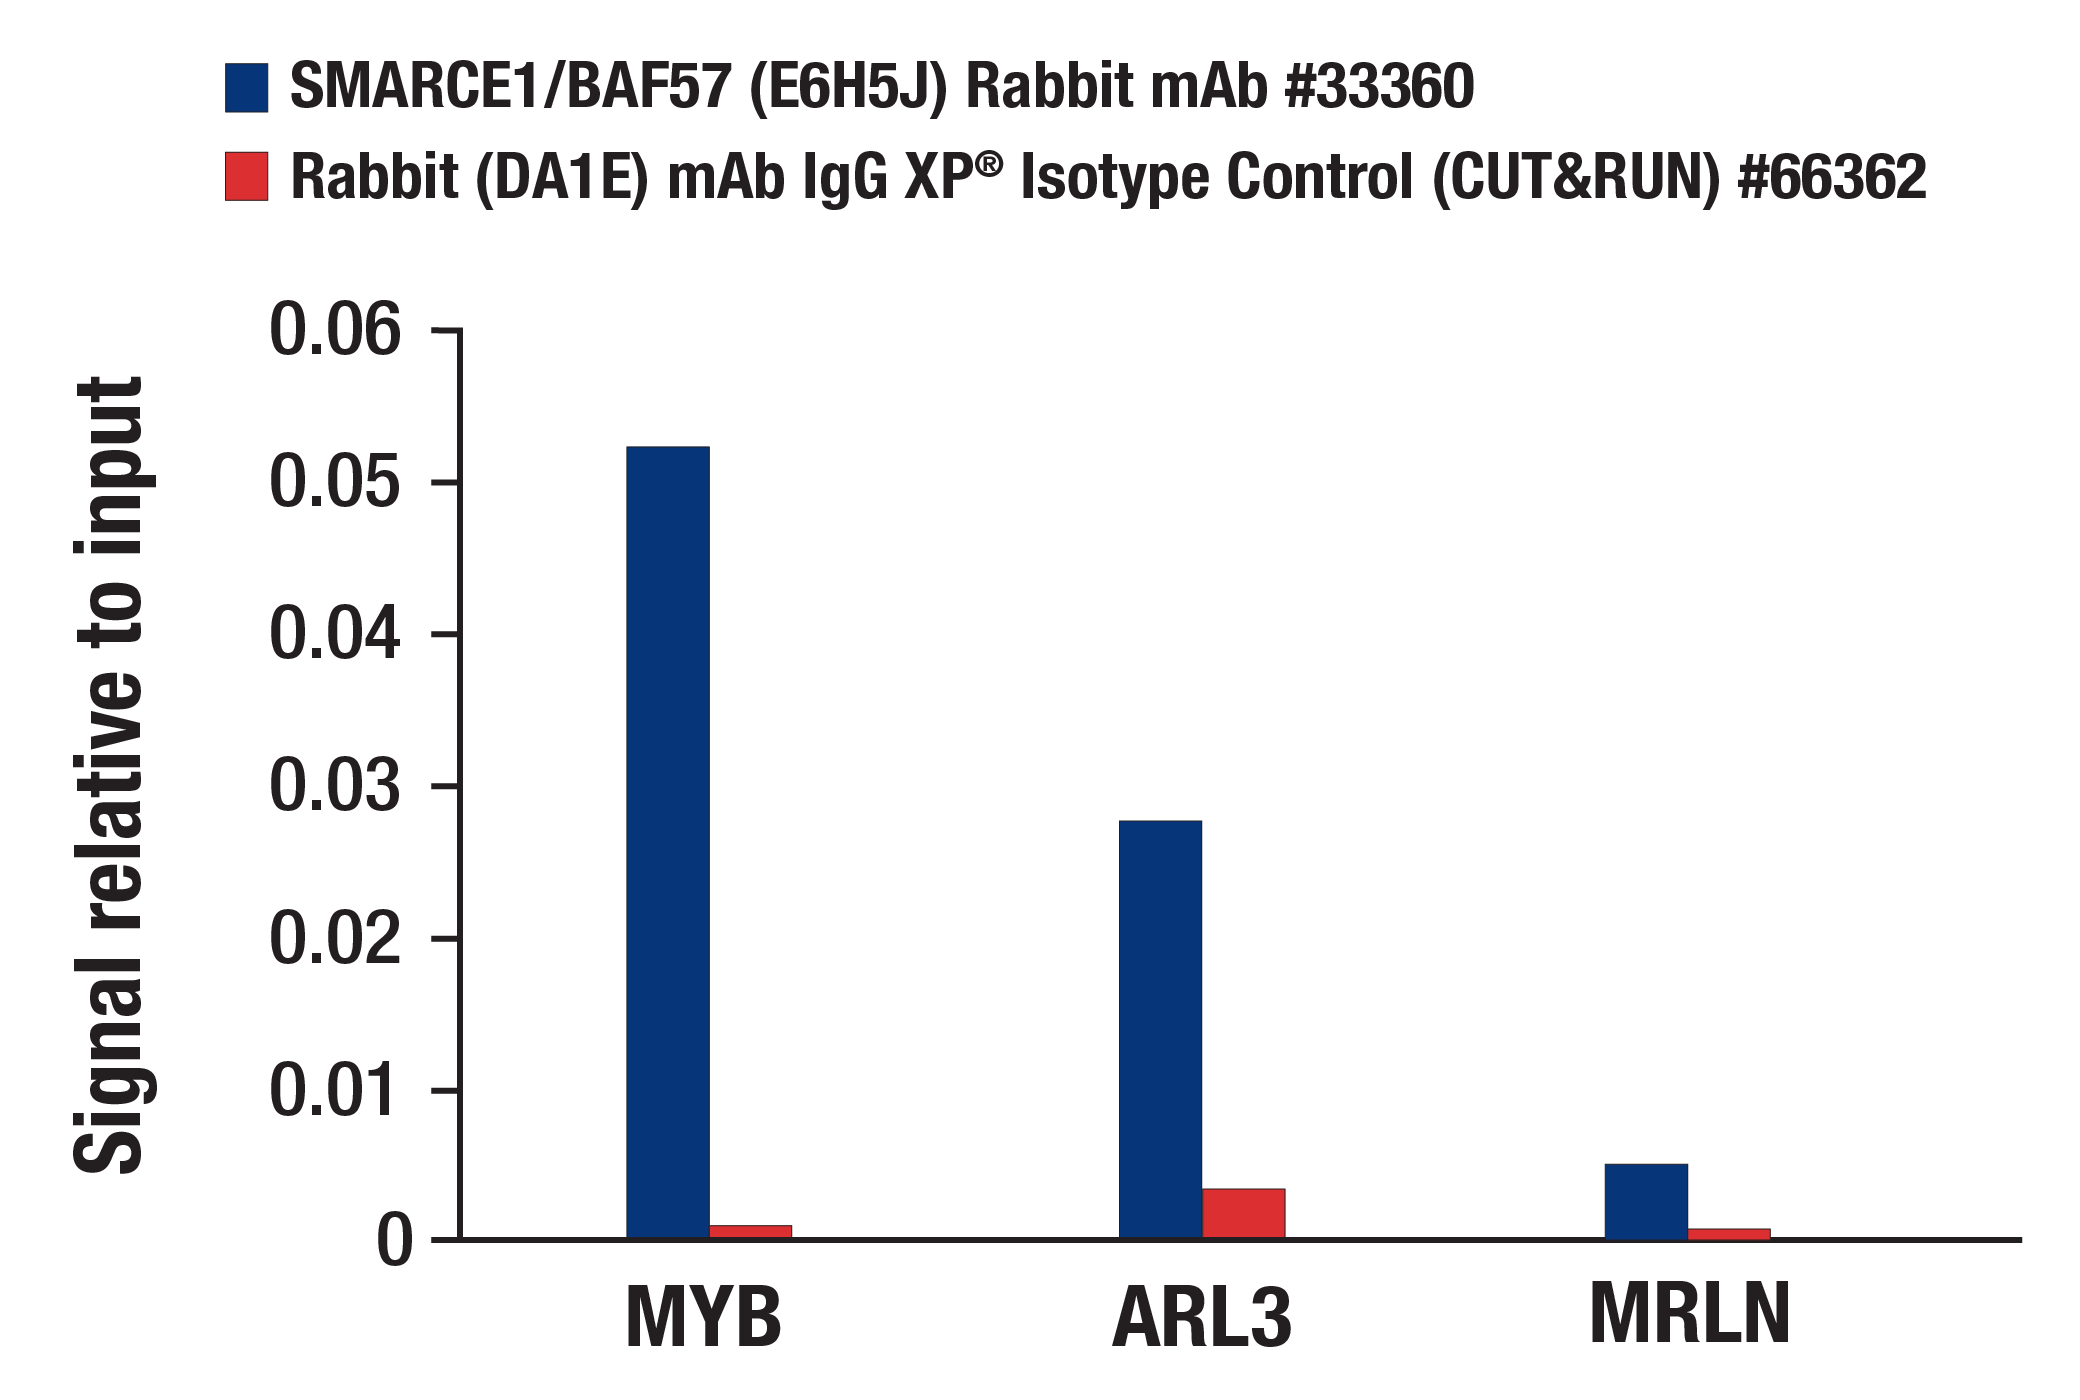 CUT and RUN Image 3: SMARCE1/BAF57 (E6H5J) Rabbit mAb